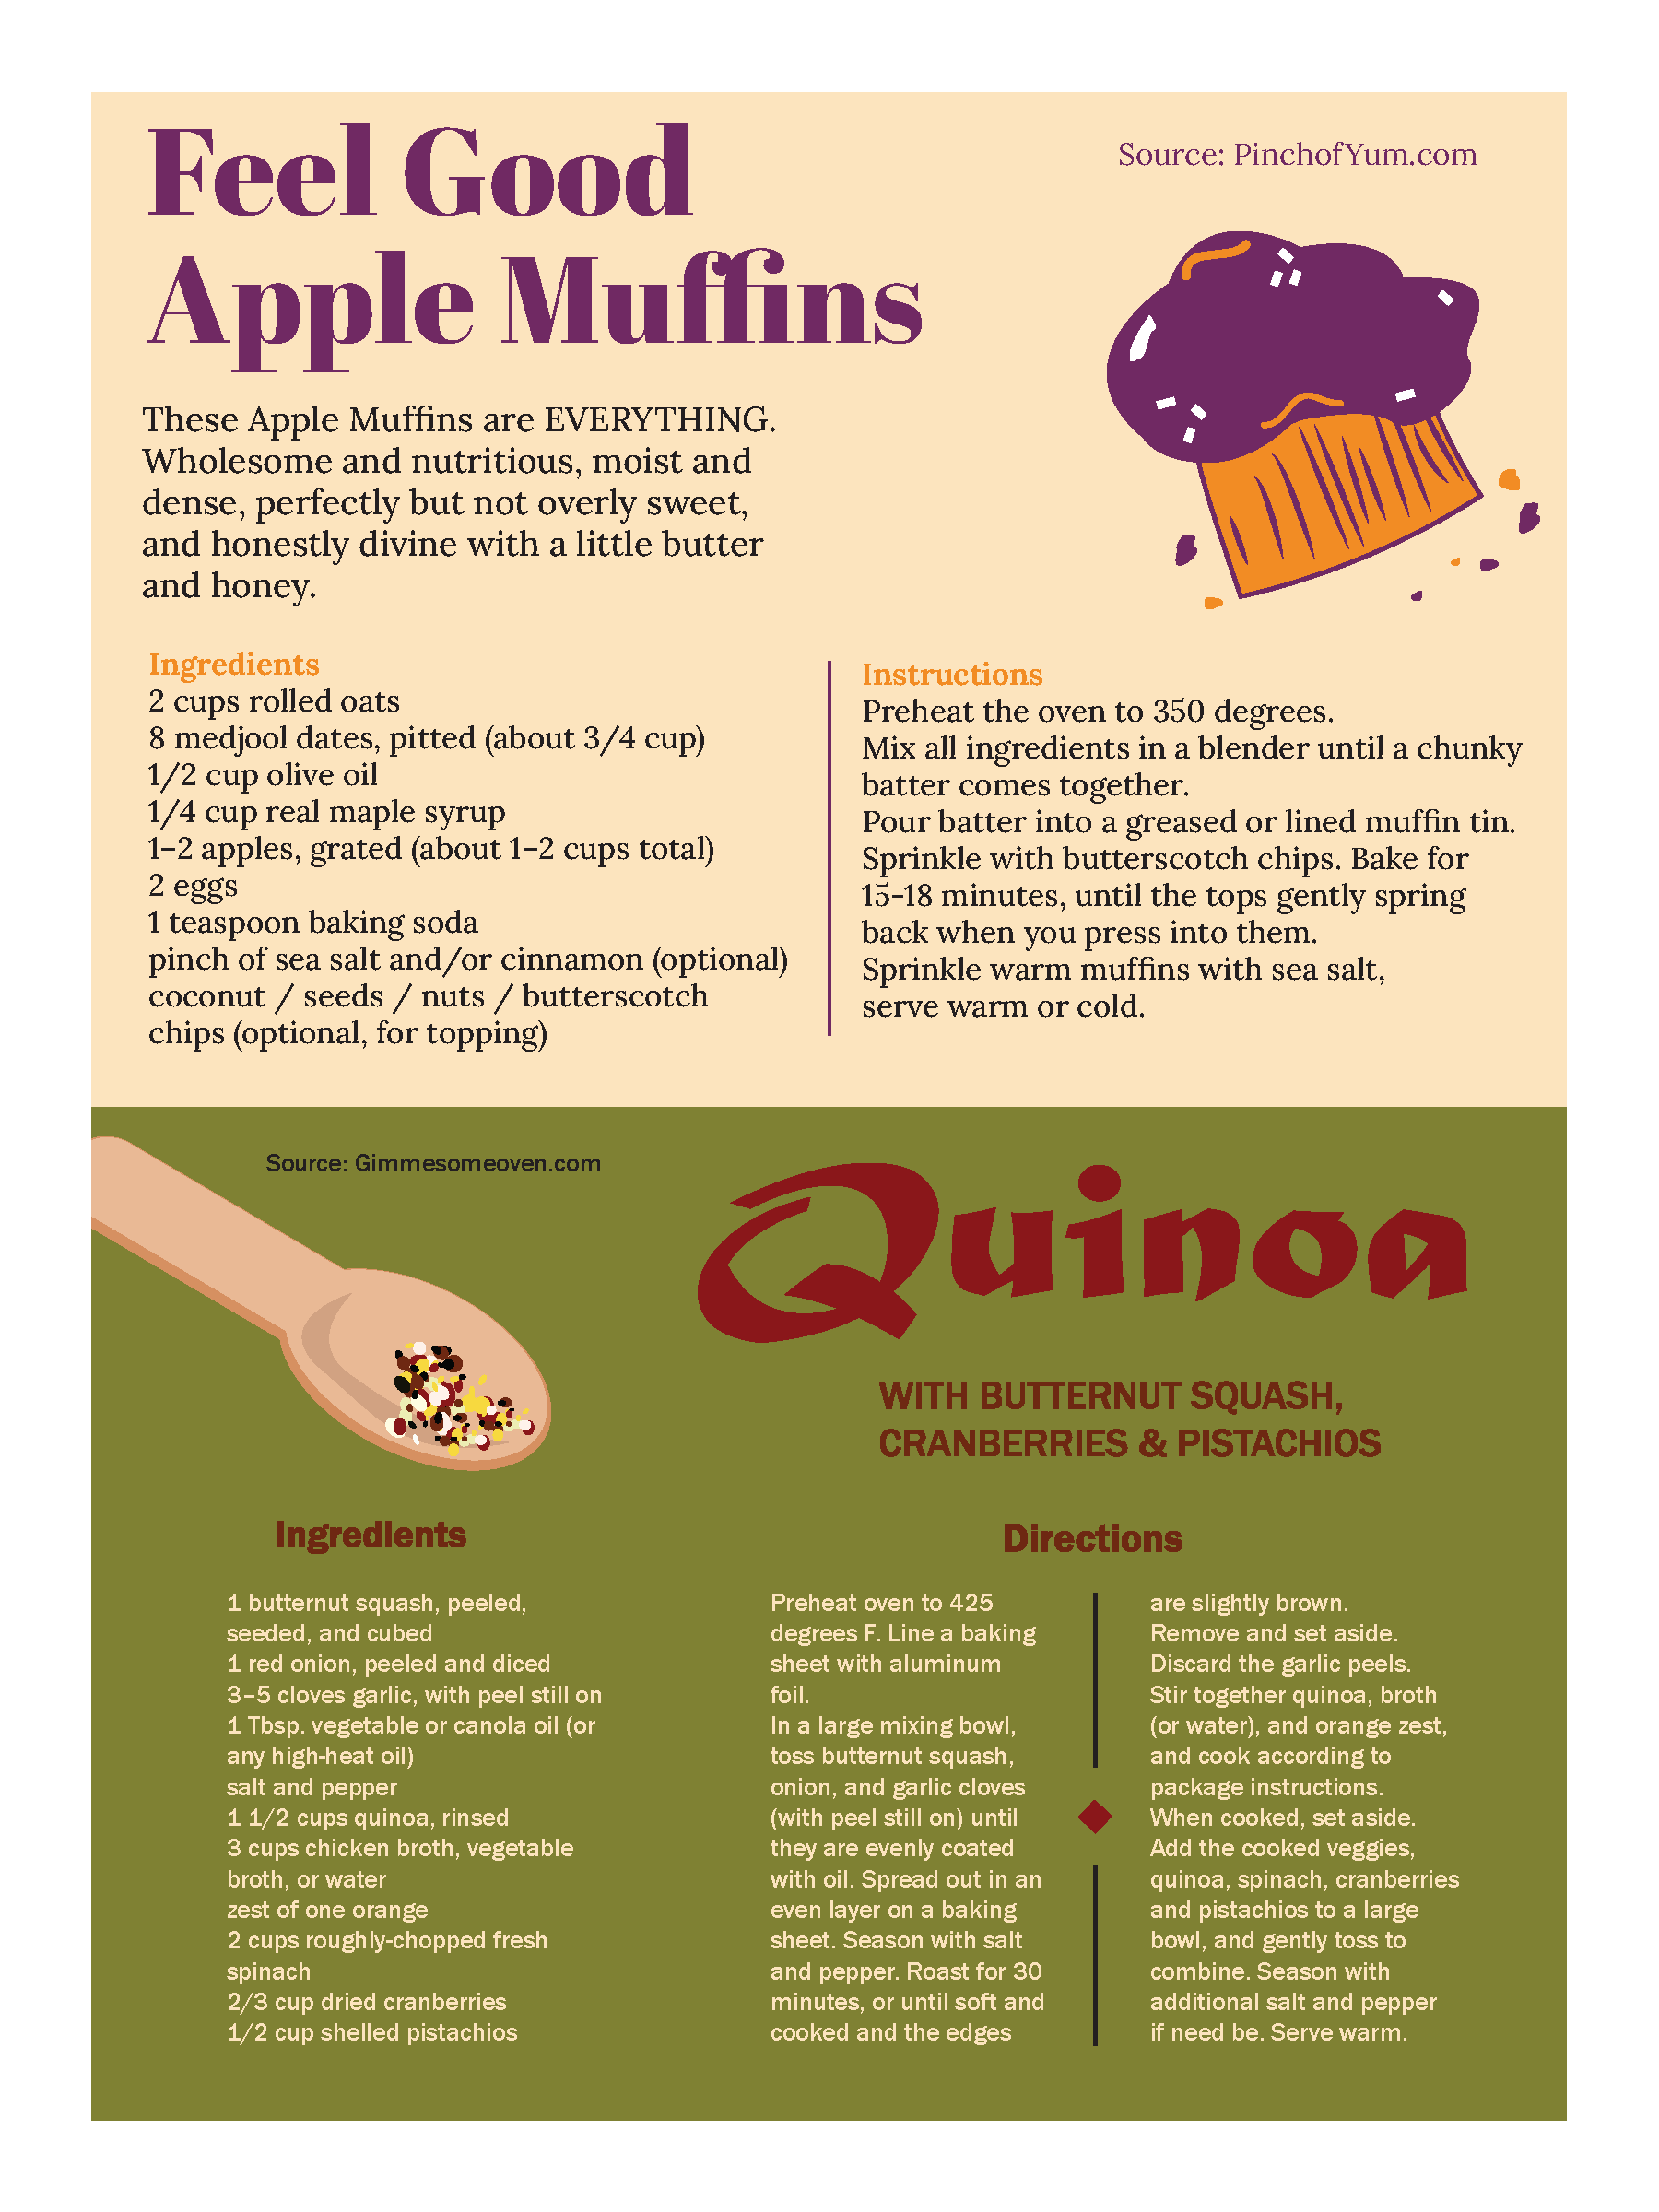 Feel Good Apple Muffins